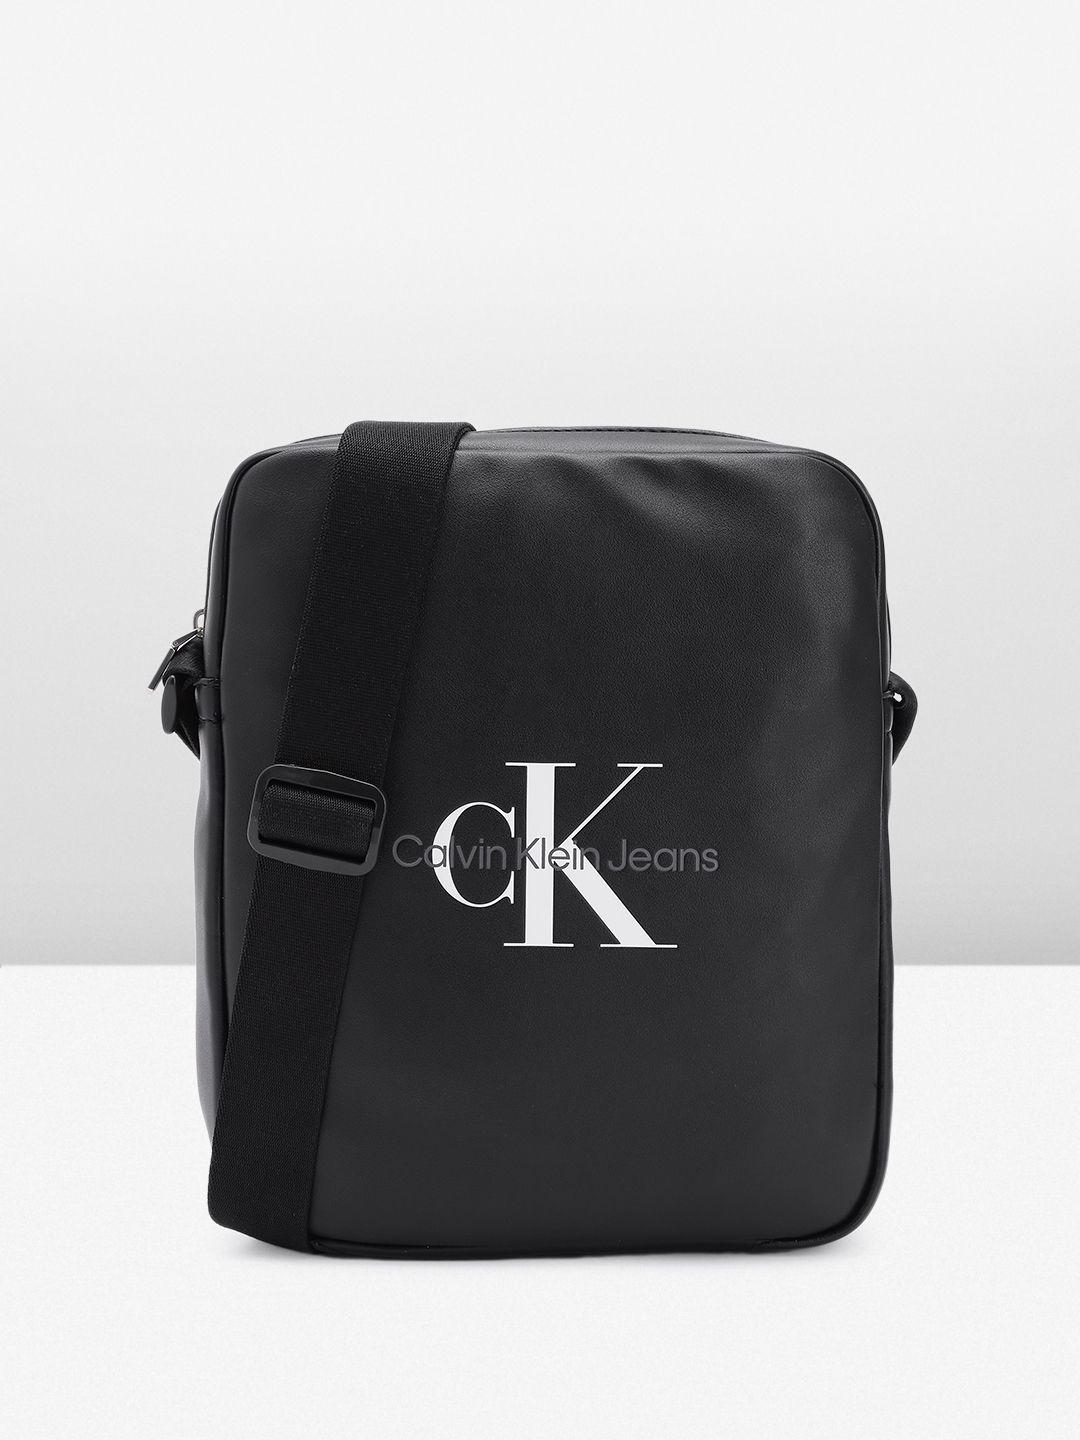 calvin-klein-men-brand-logo-printed-messenger-bag